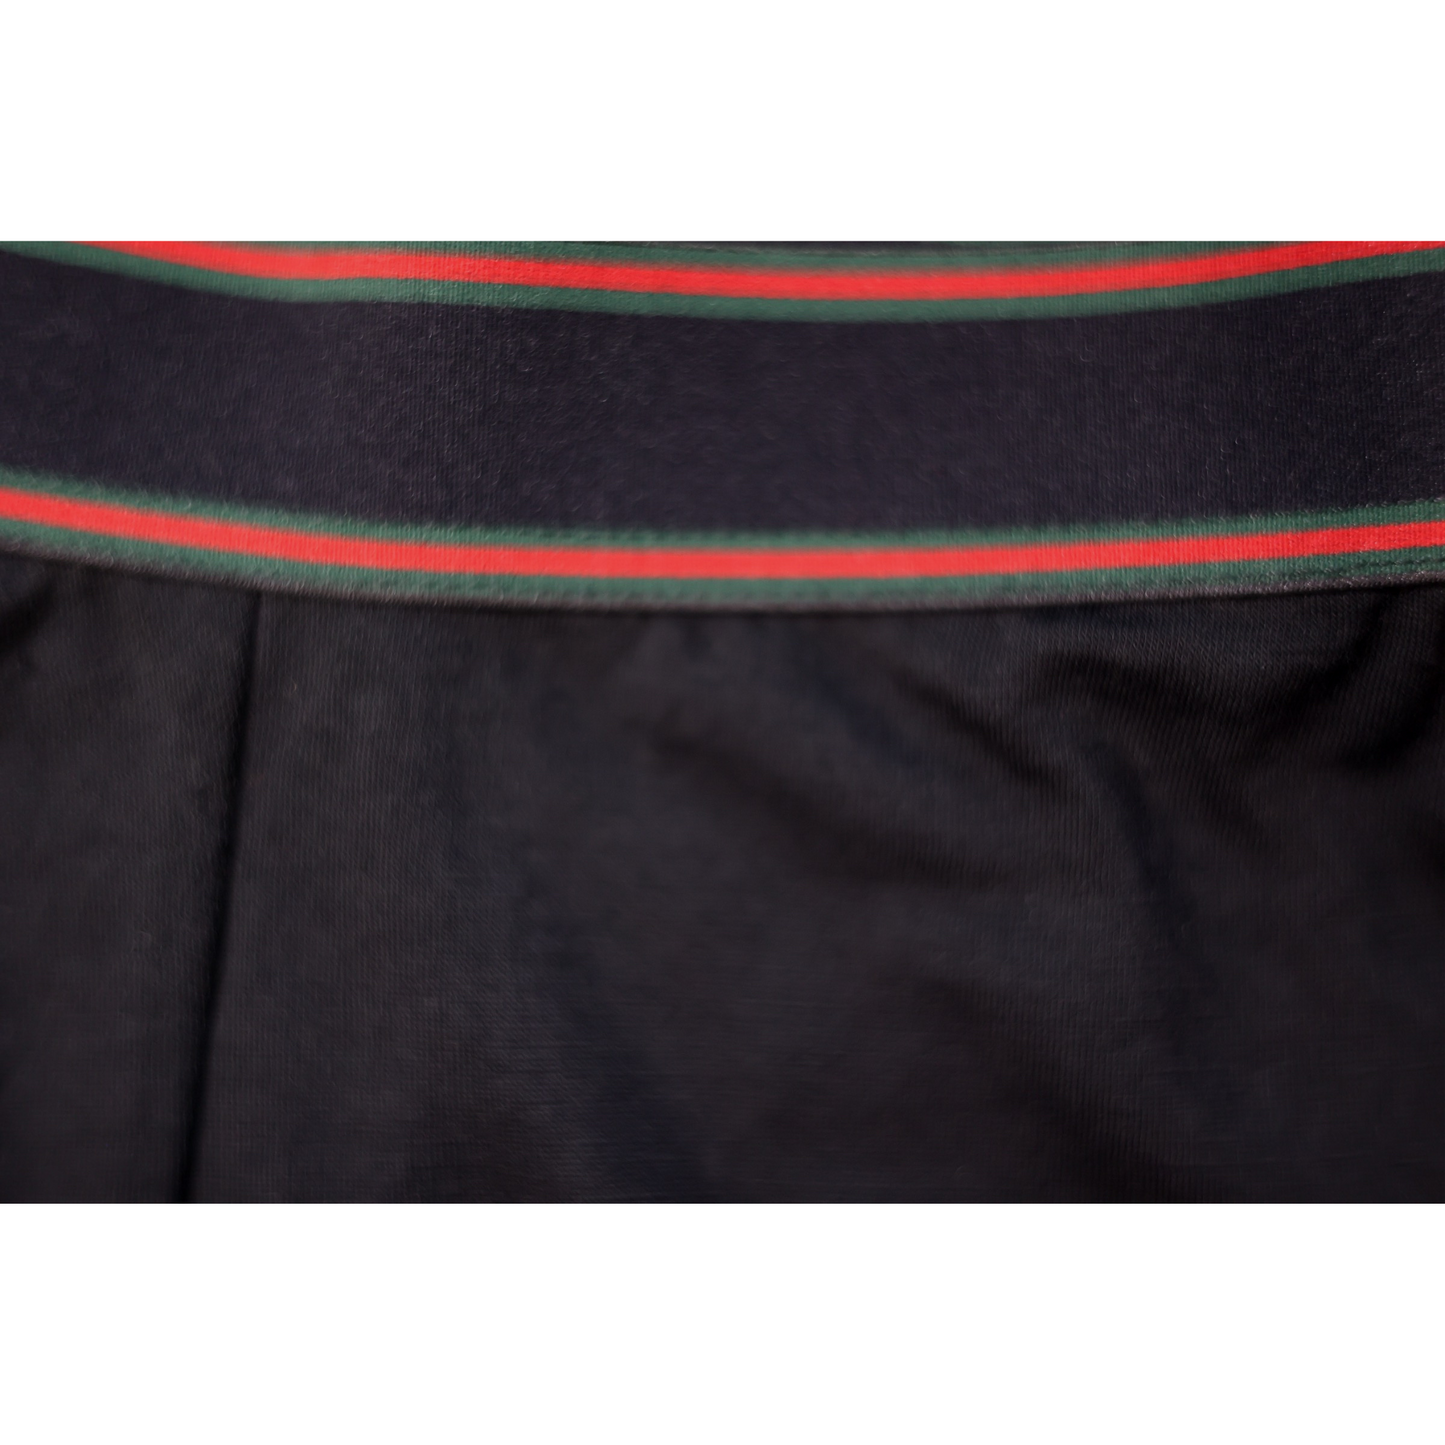 ELZI Black Merino Boxers - Double Red and Green Stripes